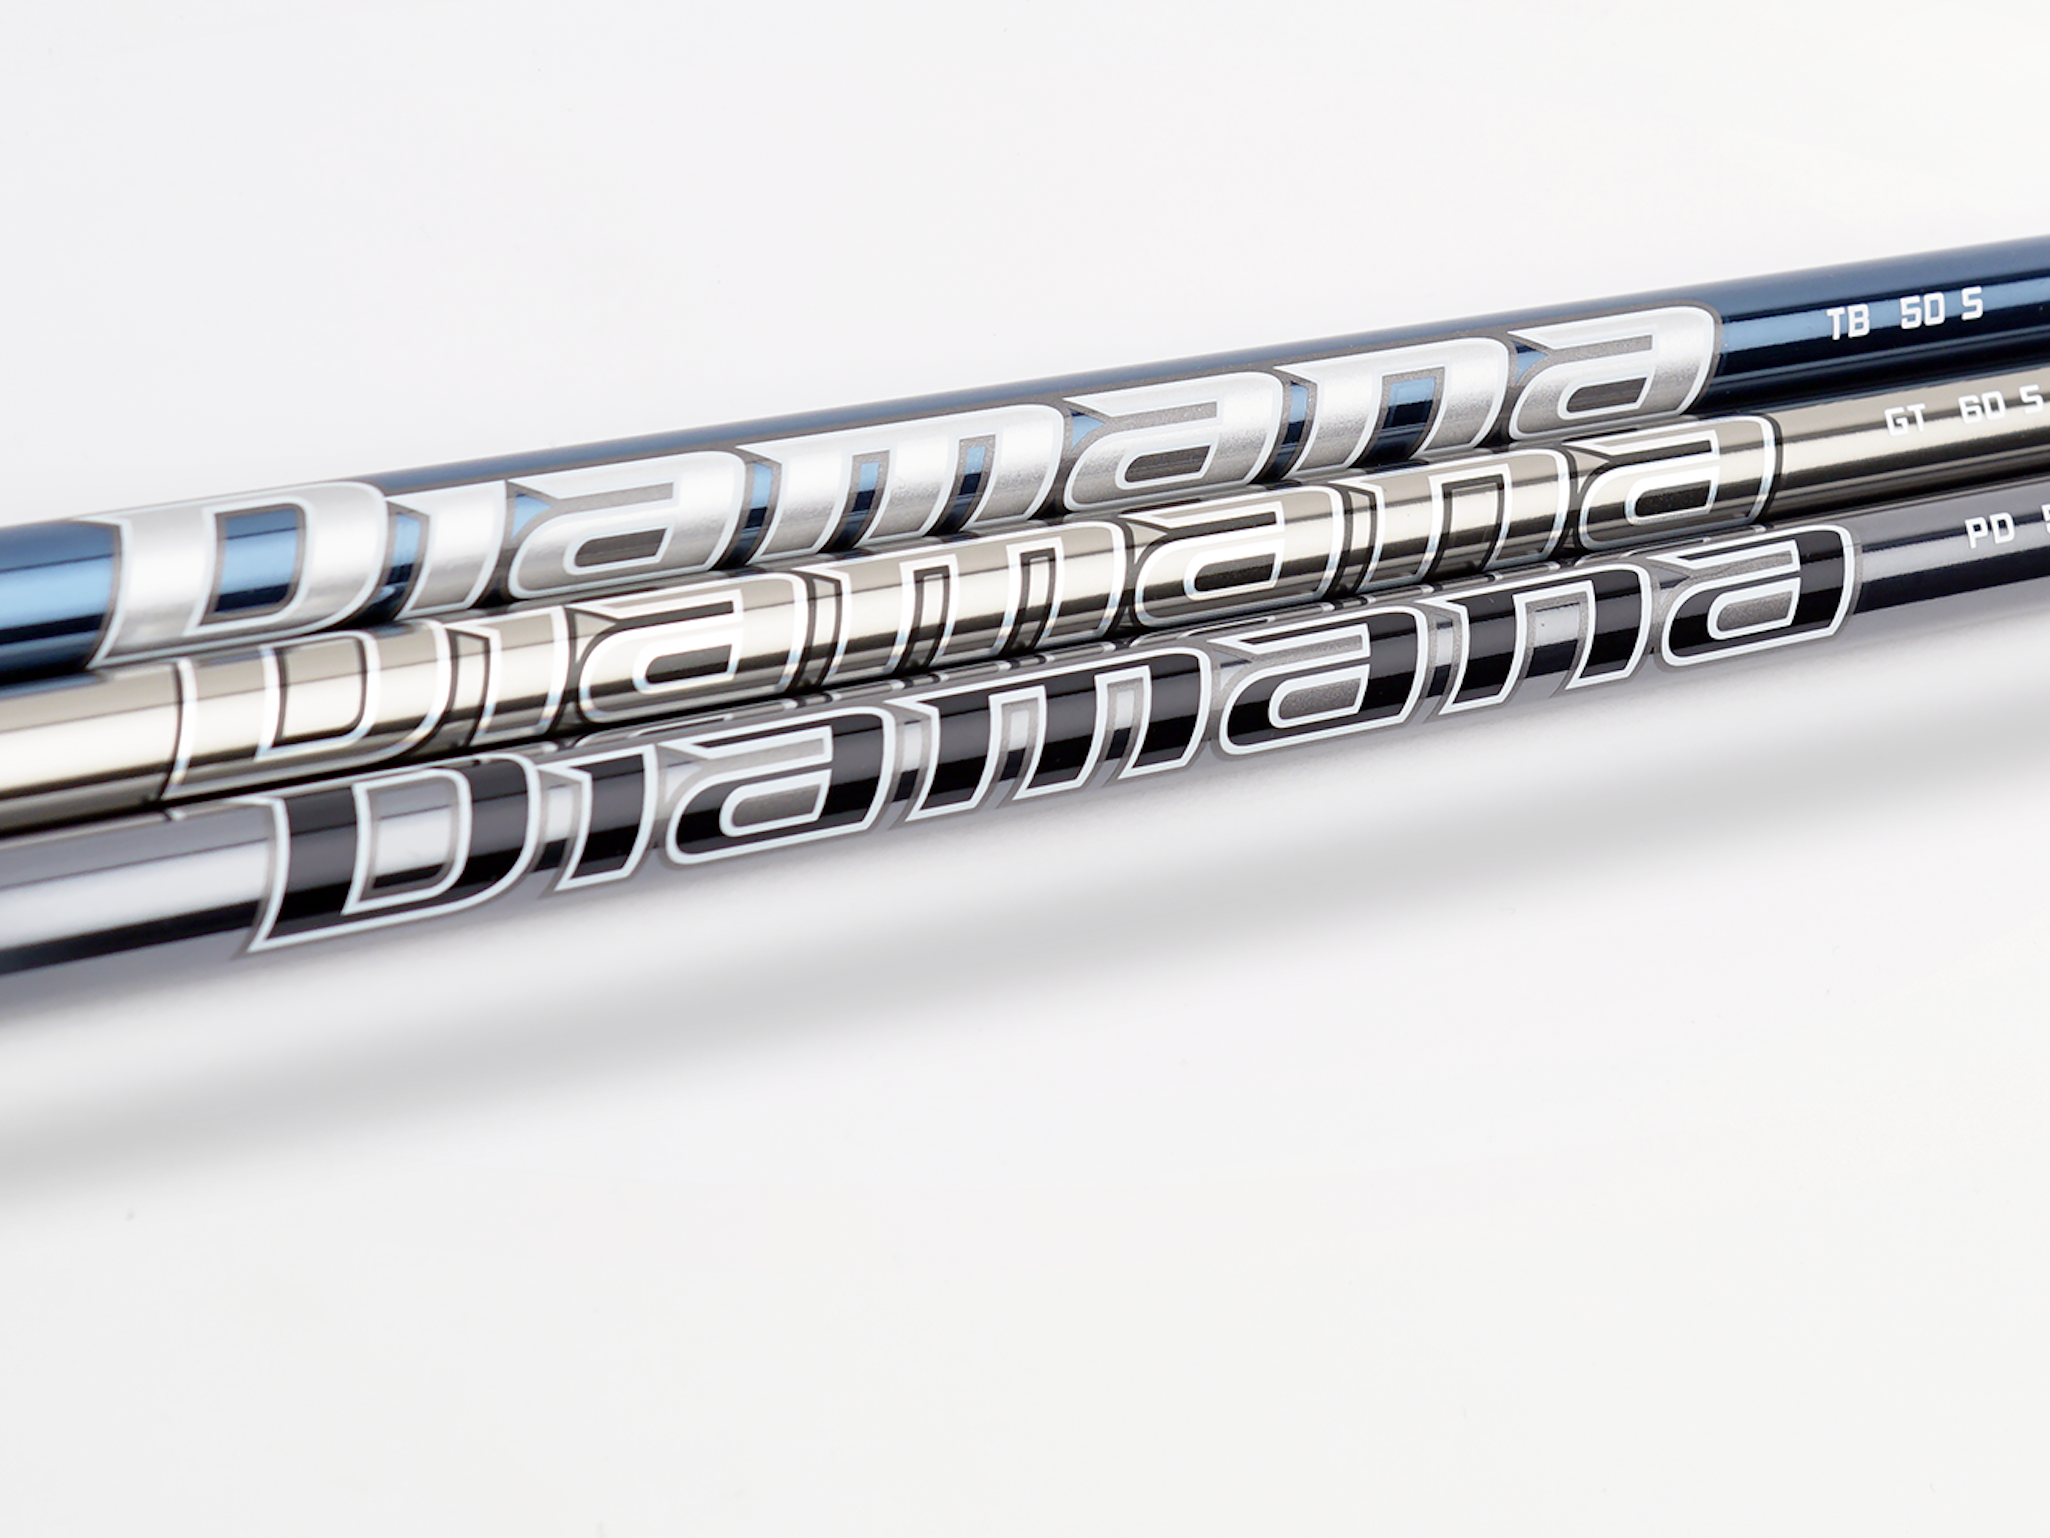 Mitsubishi Chemical unveils new Diamana GT shaft – GolfWRX